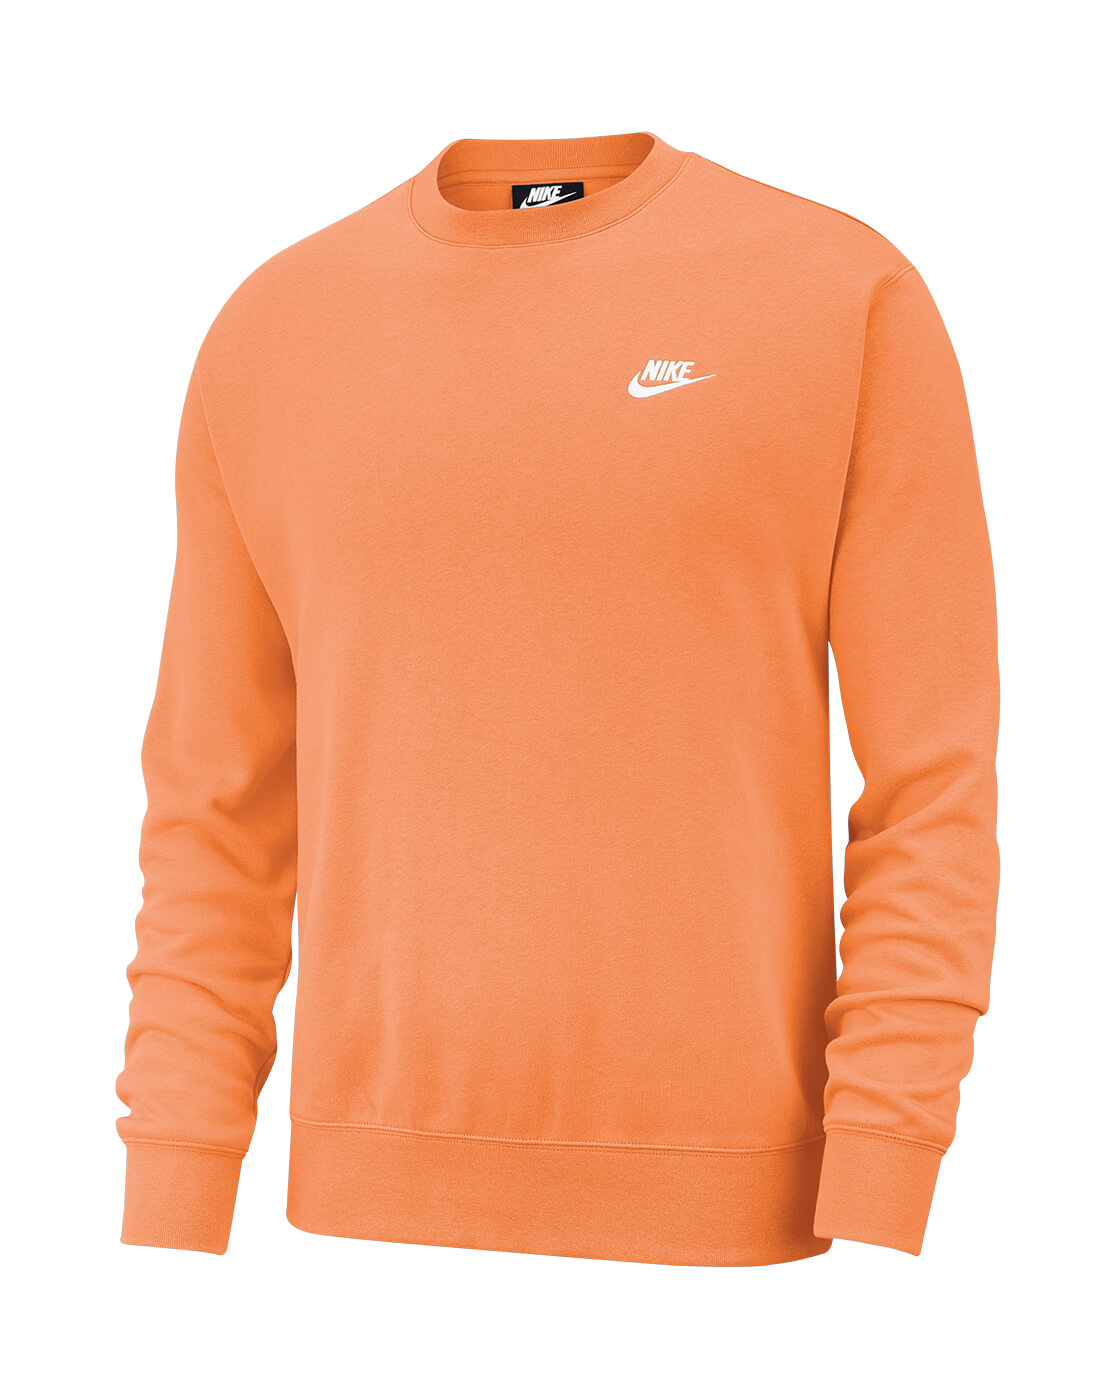 orange nike sweatshirt mens